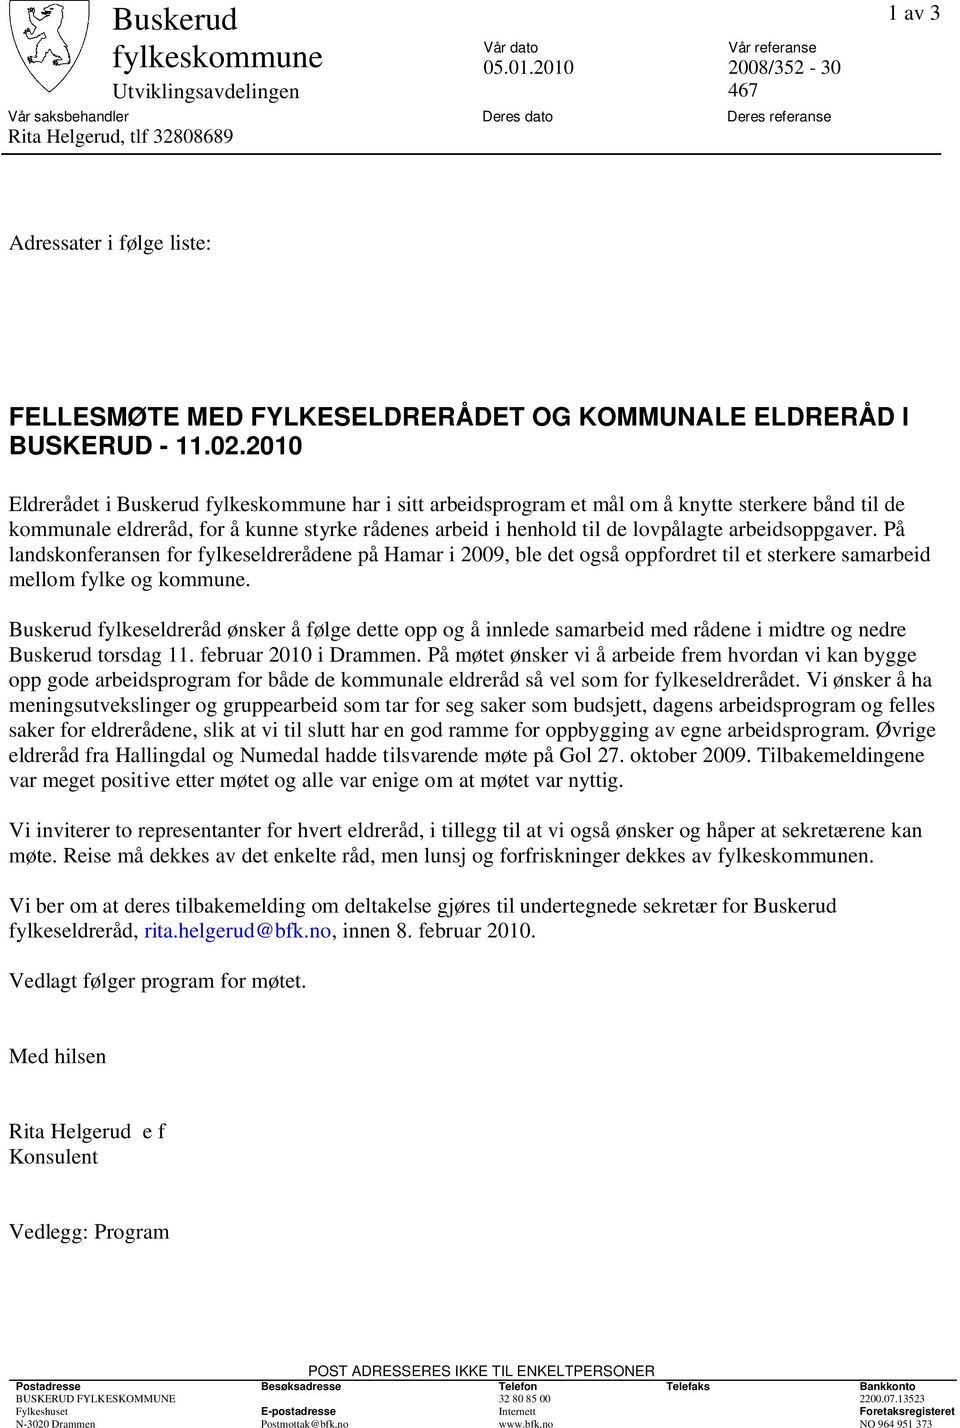 ELDRERÅD I BUSKERUD - 11.02.